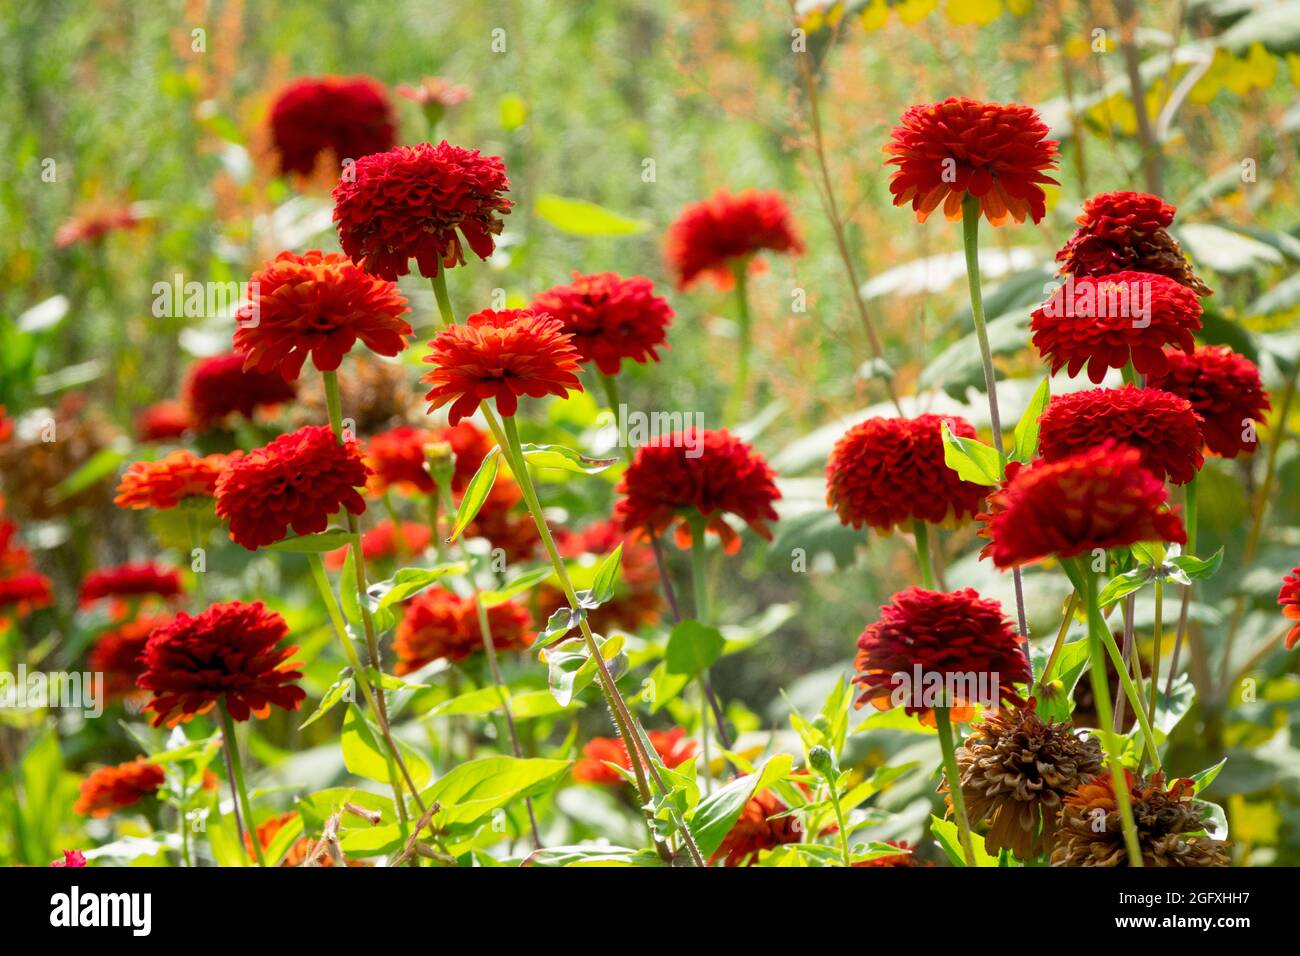 Rote Zinnia Garten Grenze Blumenbeet, Spätsommergarten nähert Herbst, Sommer Blume Grenze Stockfoto